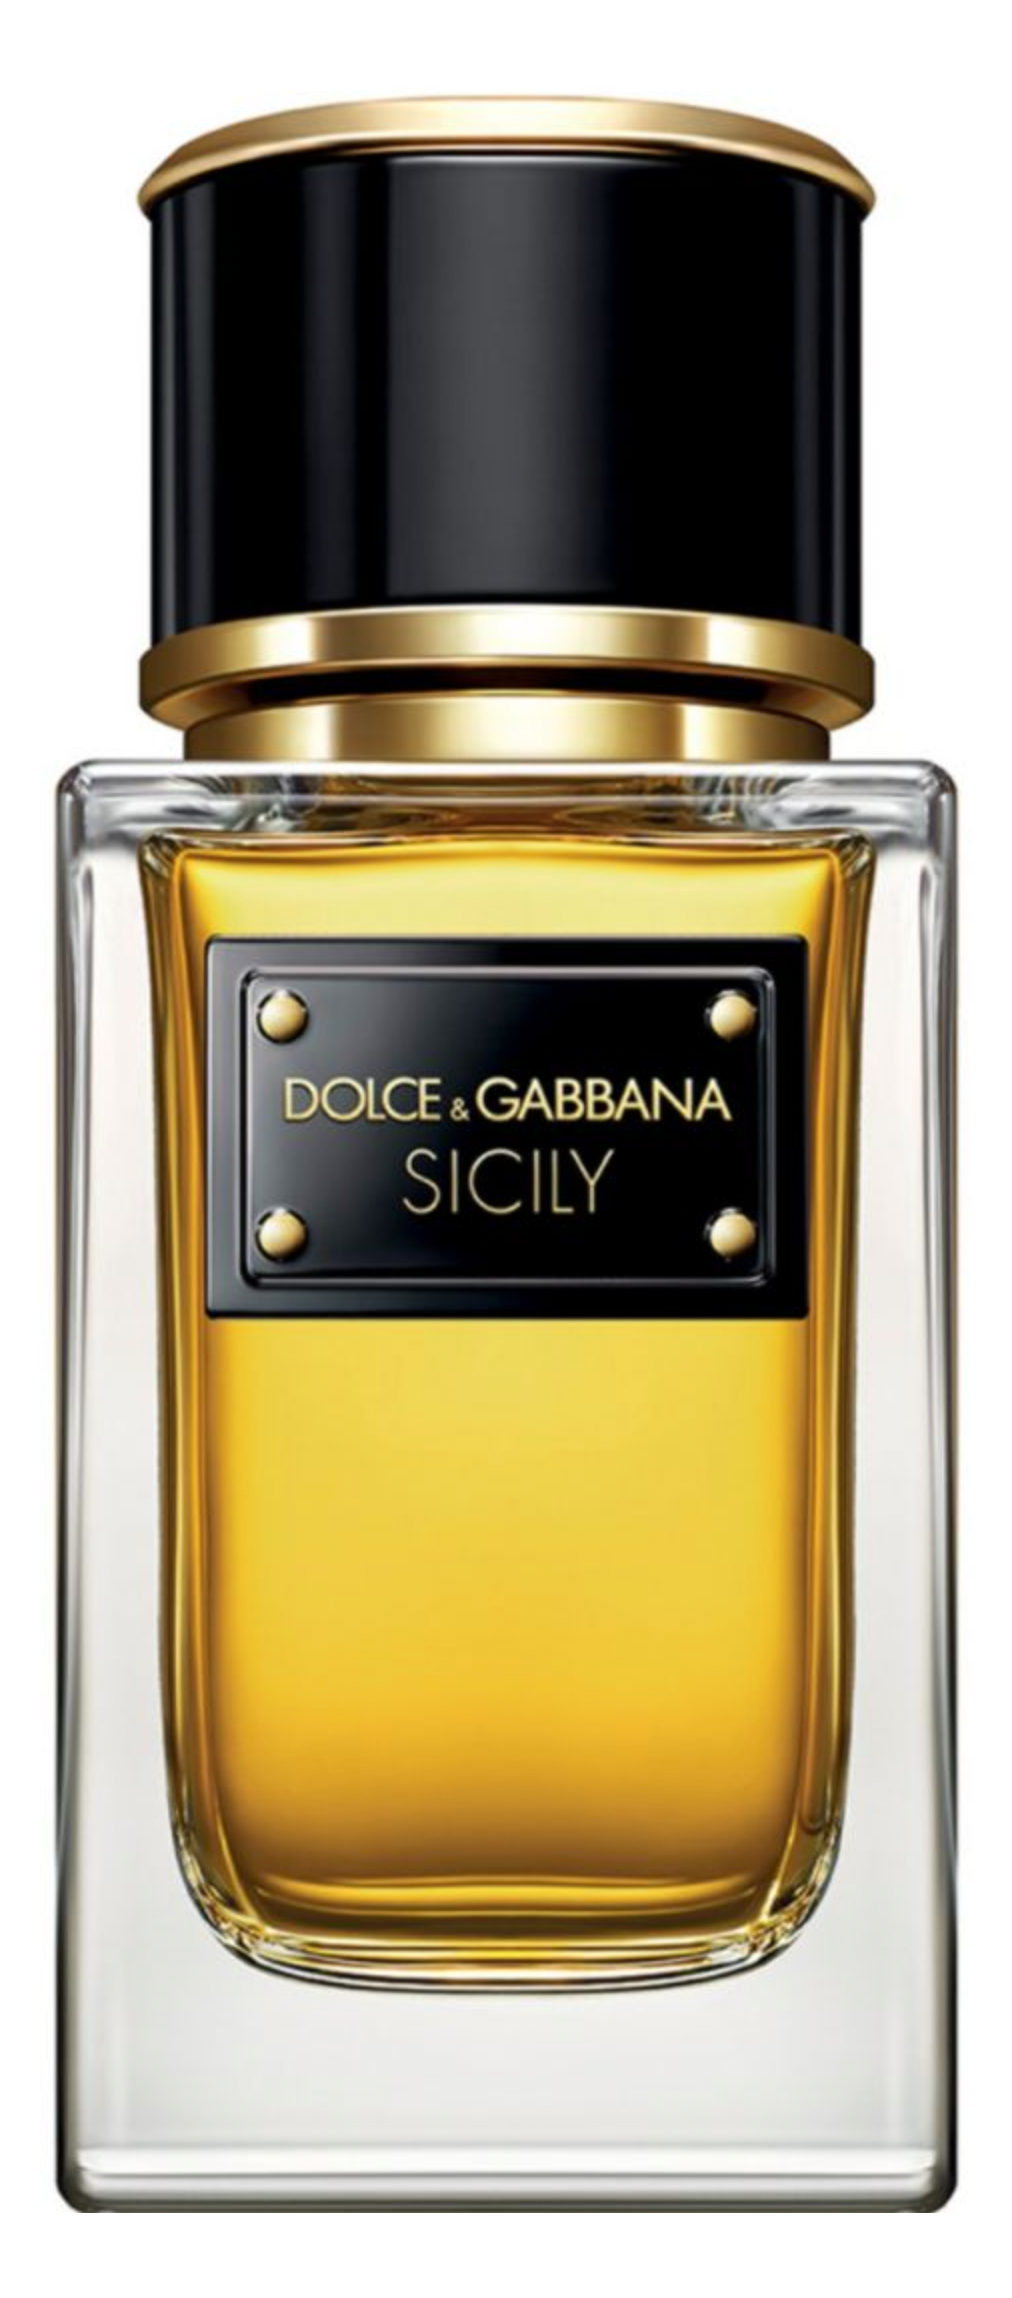 dolce and gabbana sicily perfume